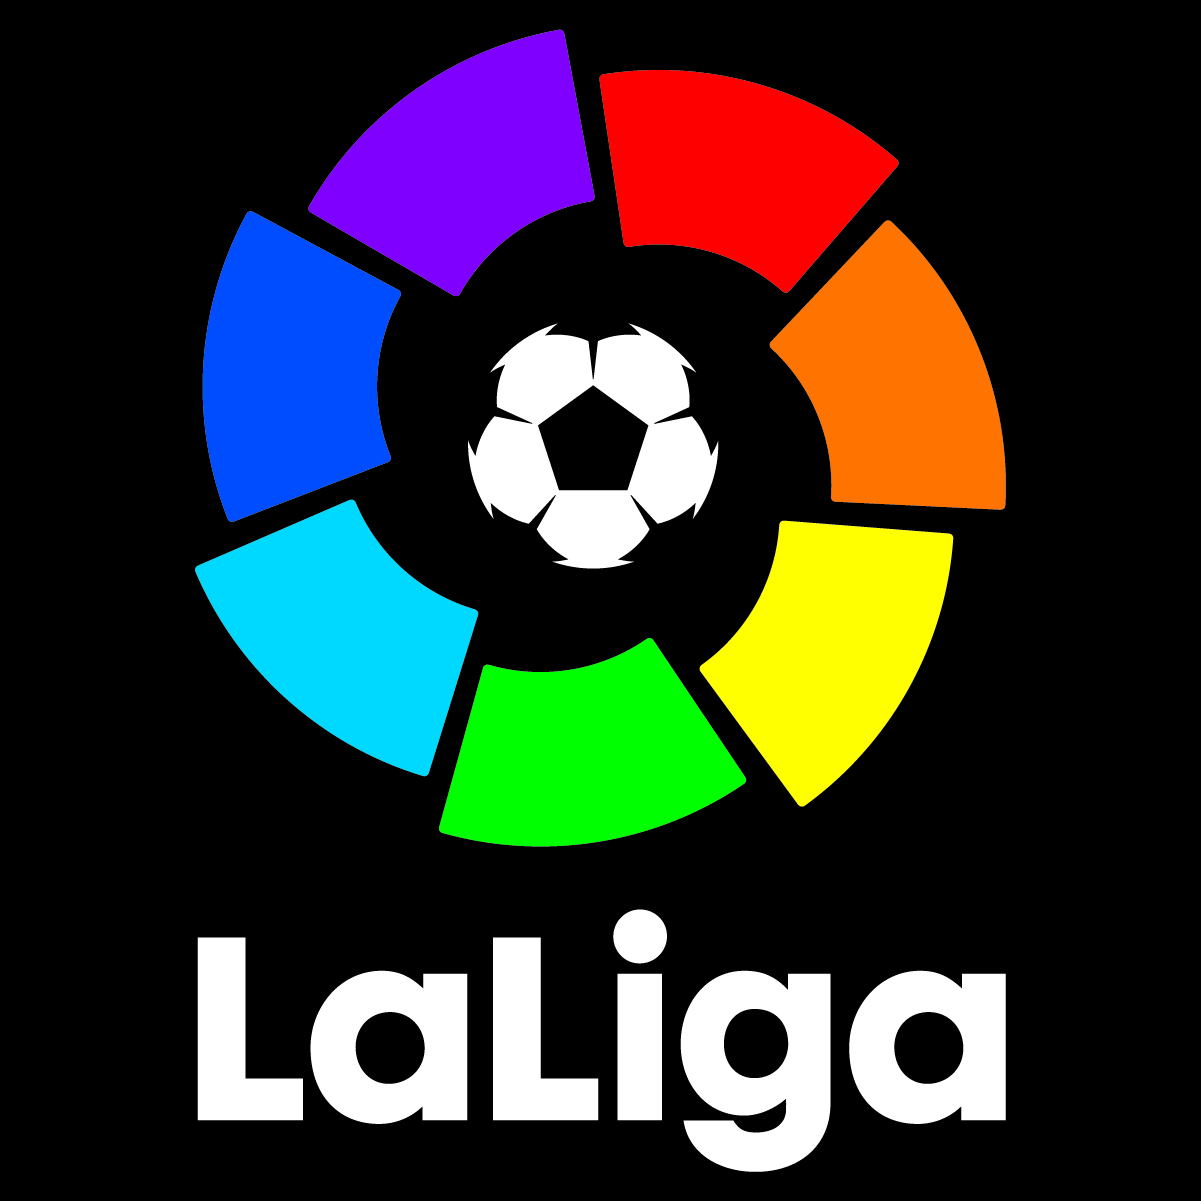 La liga spanish league logo